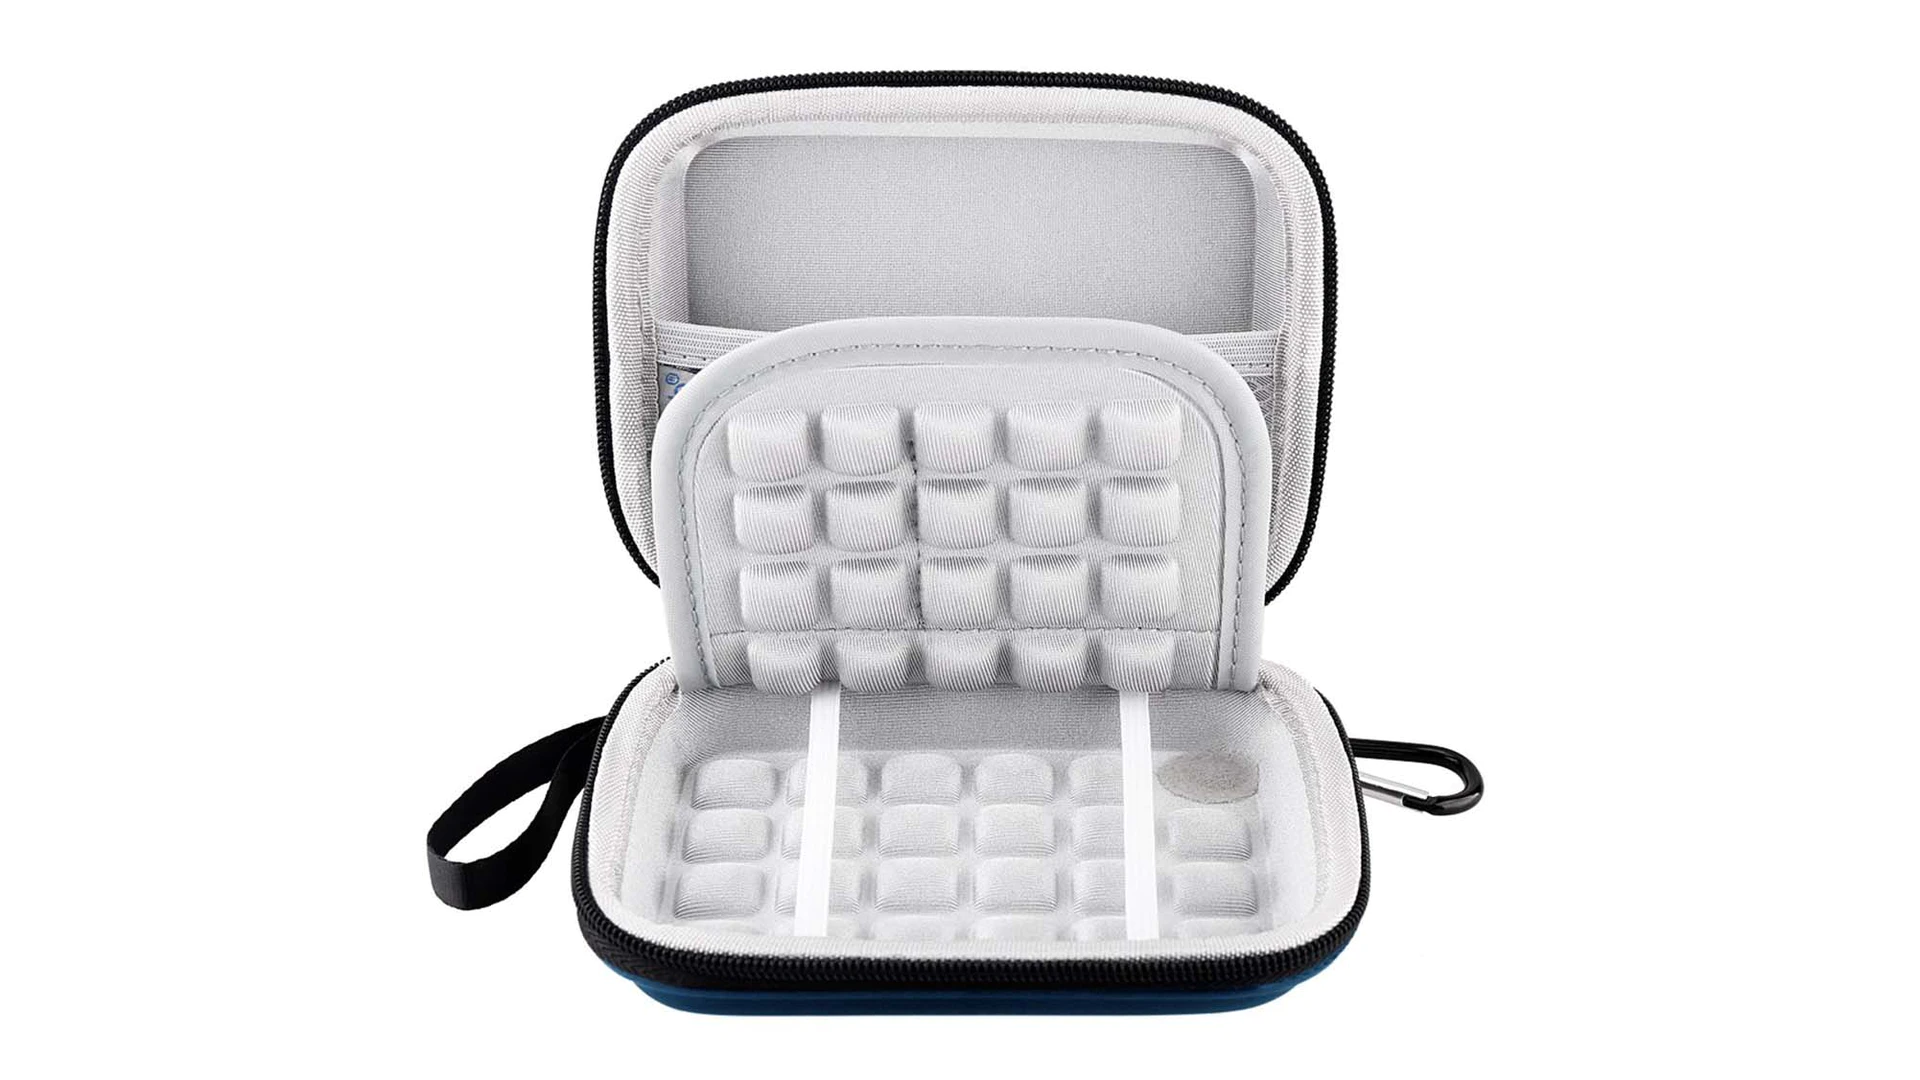 portable eva foam case with strap for gopro camera